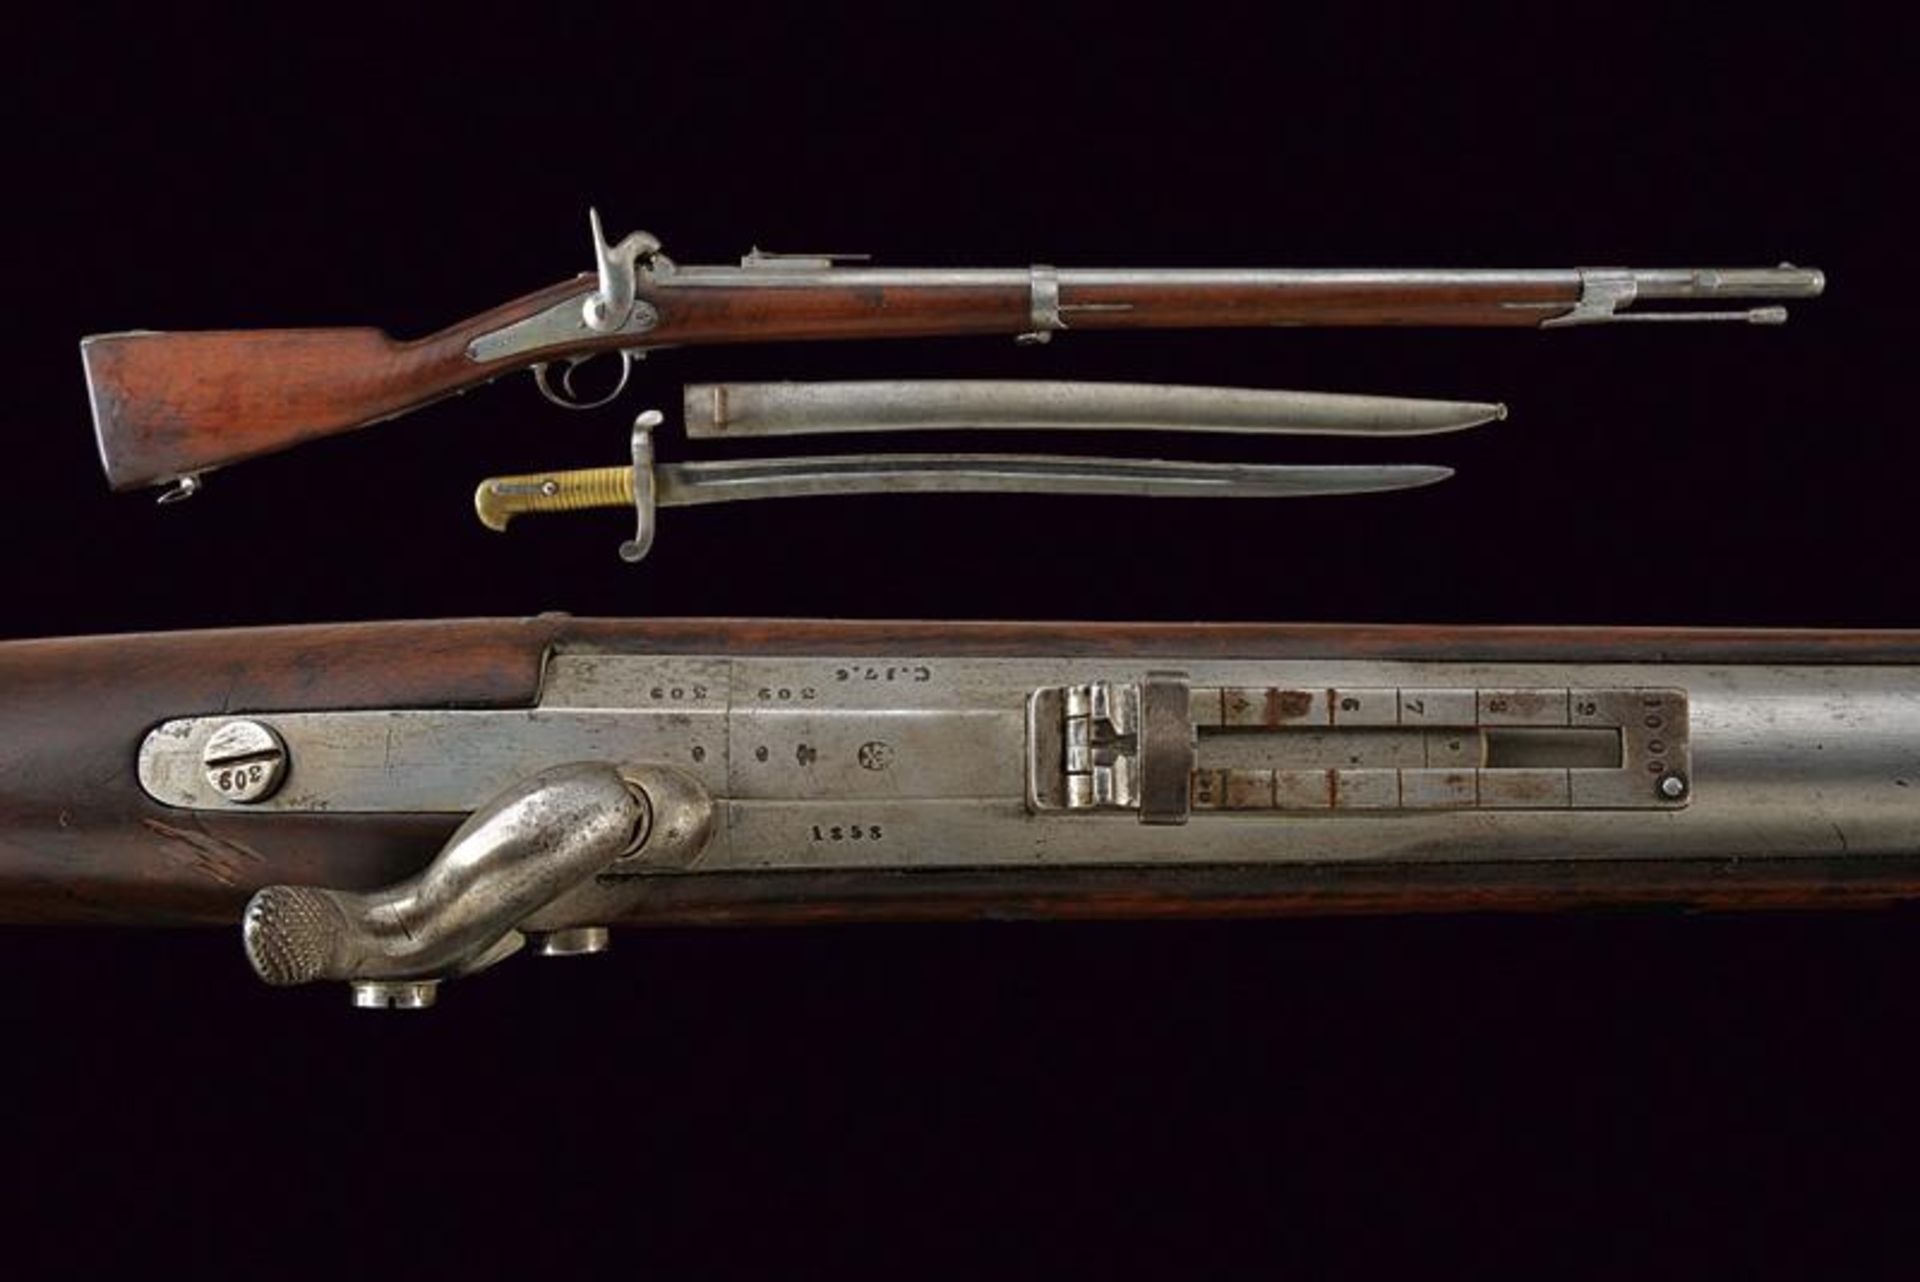 A very rare Mazzocchi percussion carbine with bayonet